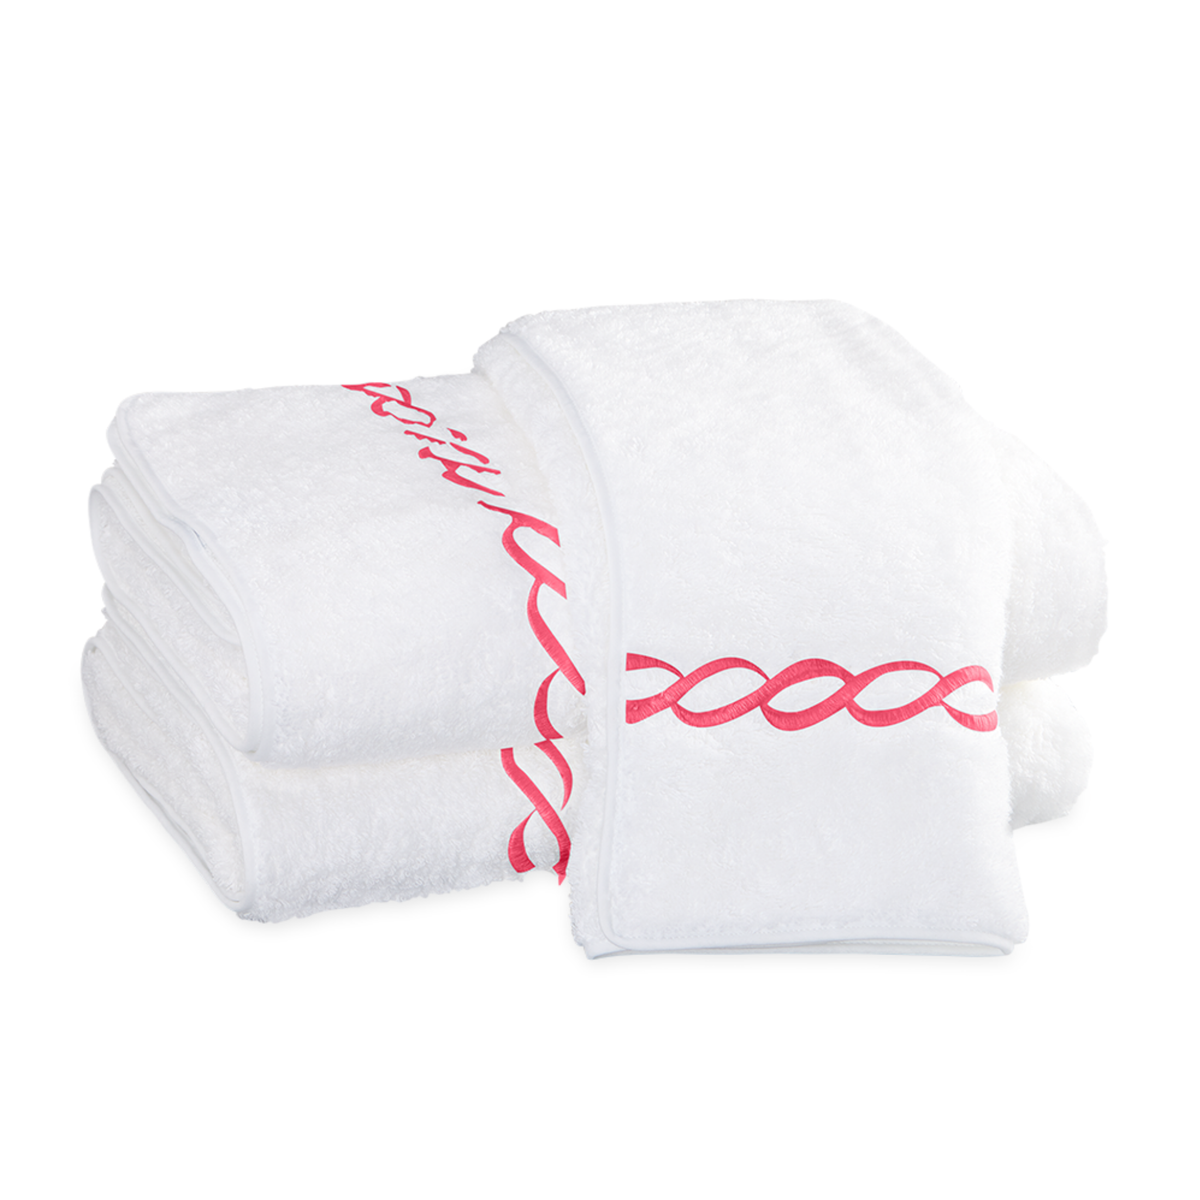 Folded Matouk Classic Chain Bath Towels in Color Azalea